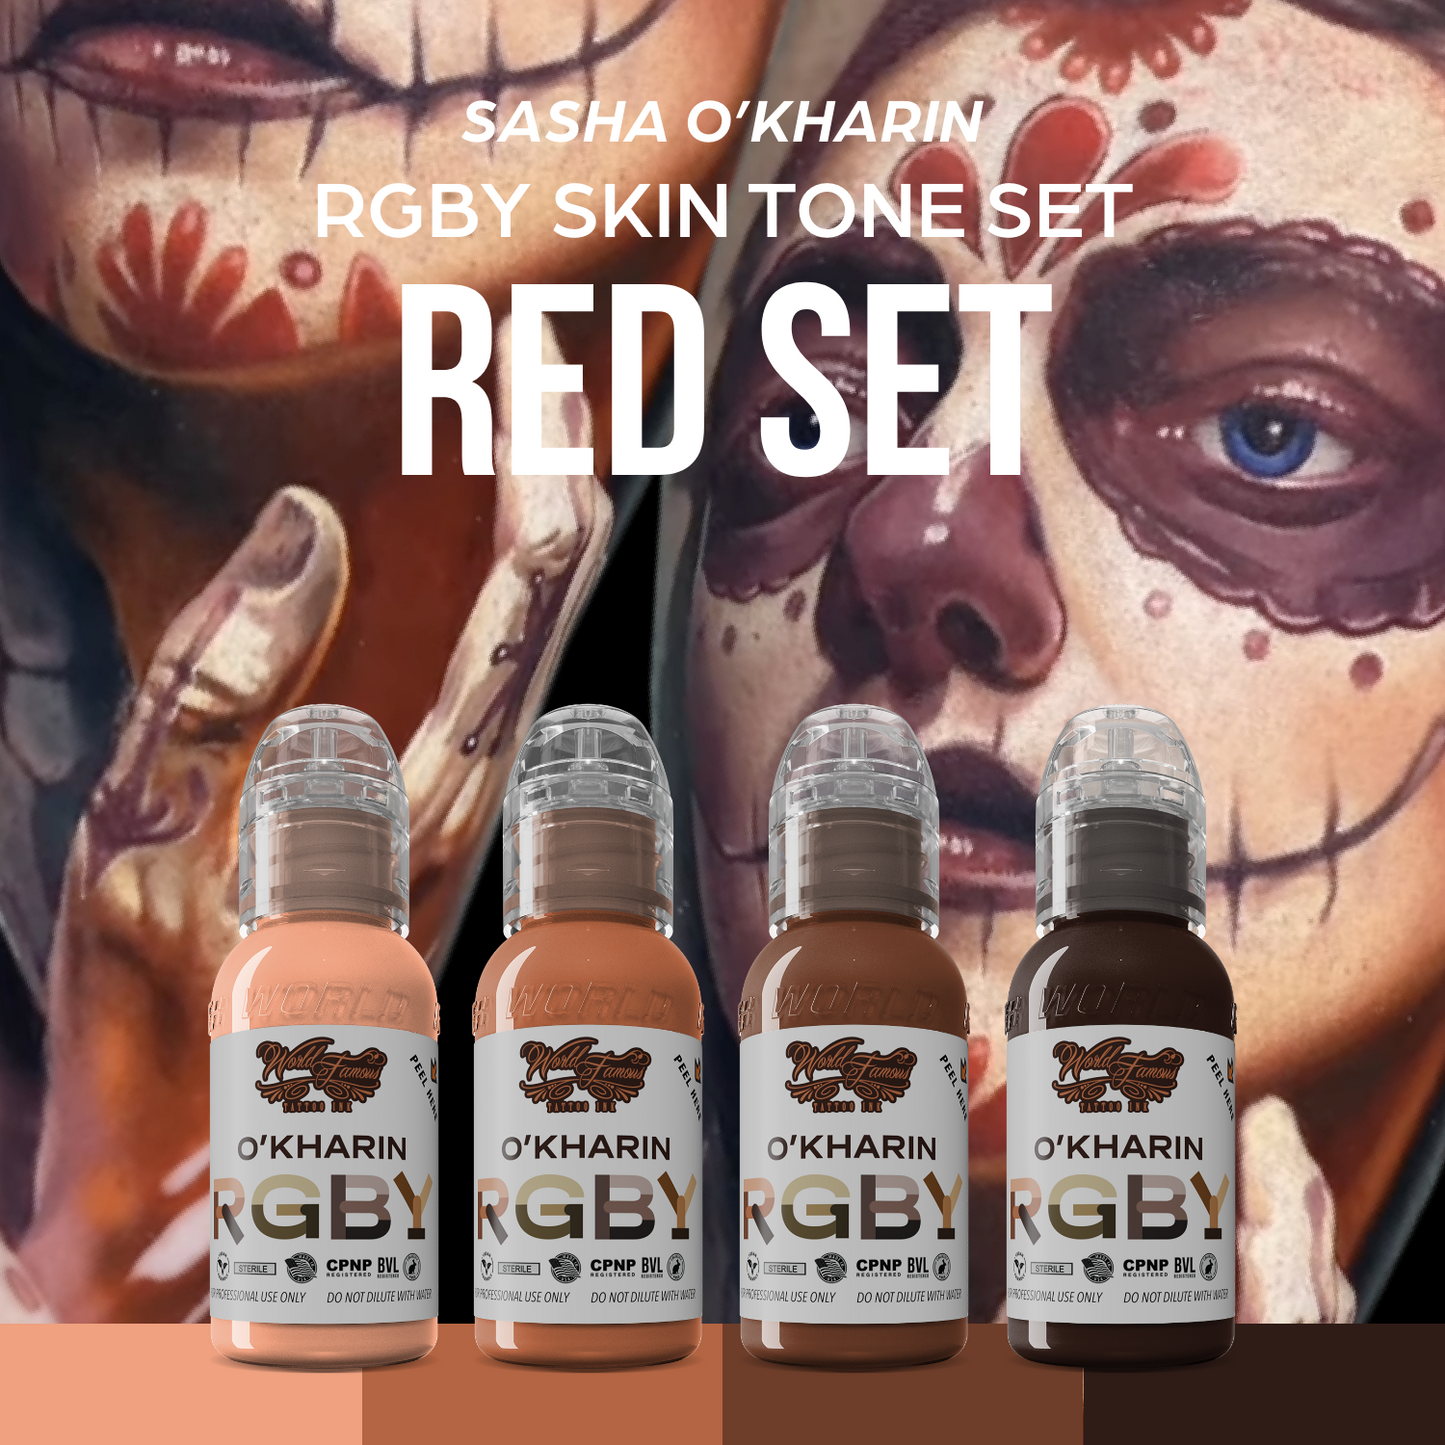 Sasha O’Kharin RGBY Skin Tone Red Mini Set of 4 Colors — World Famous — 1oz